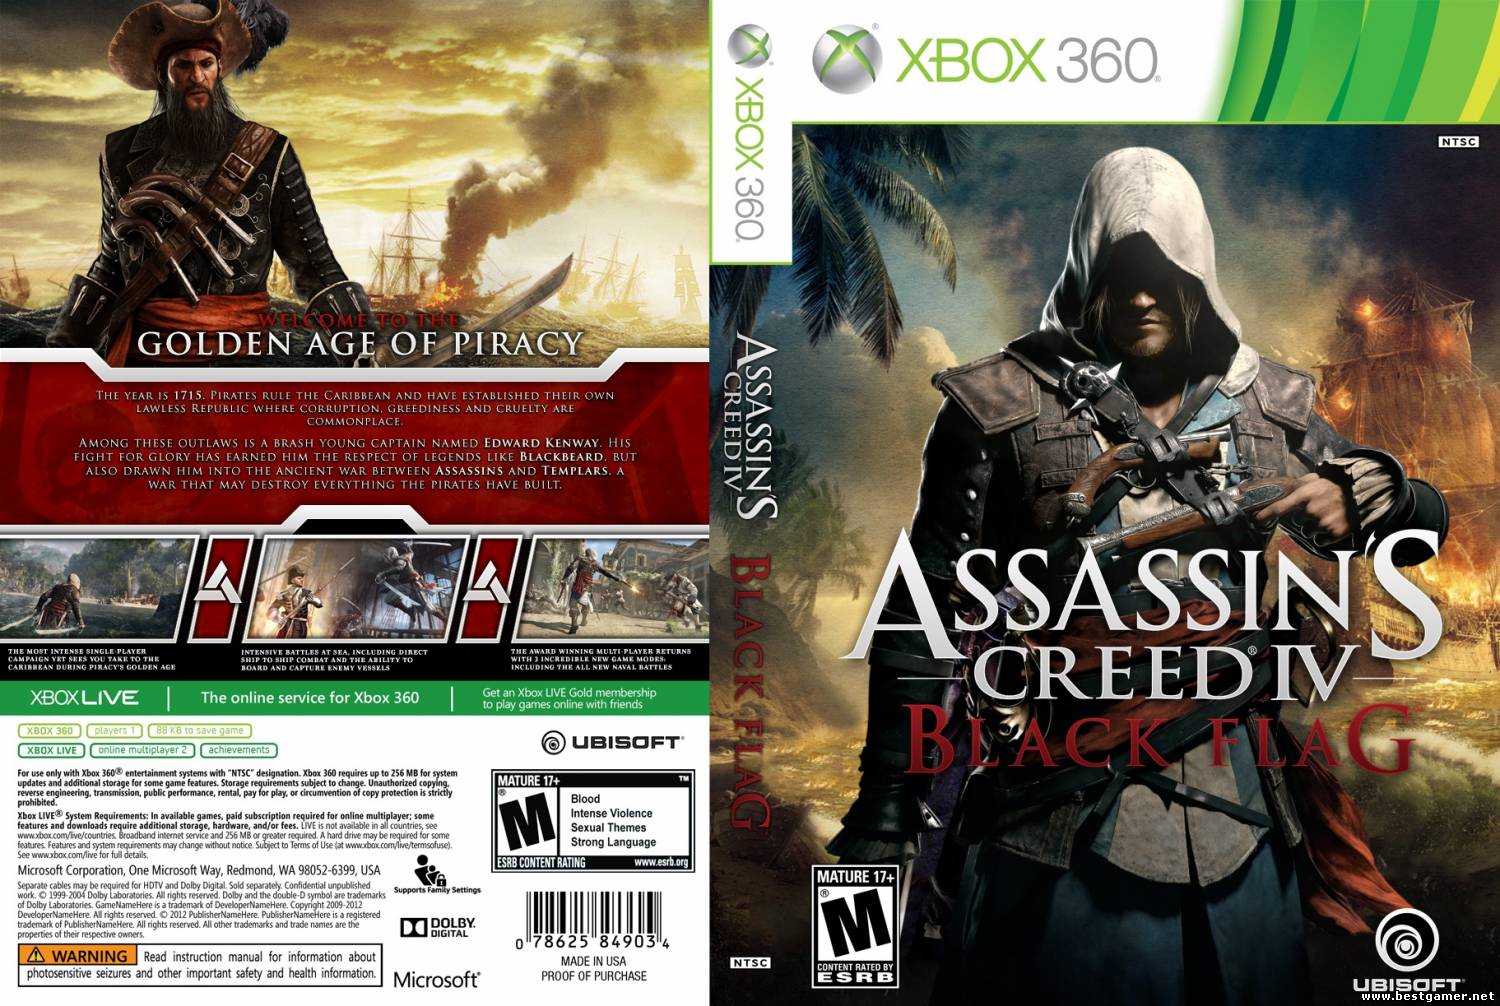 Код игры 360. Обложки игр для Xbox 360. Ассасин Крид 4 обложка хбокс 360. Assassins Creed Black Flag Xbox 360 обложка. Обложки игр ассасин Крид 4 хбокс 360.